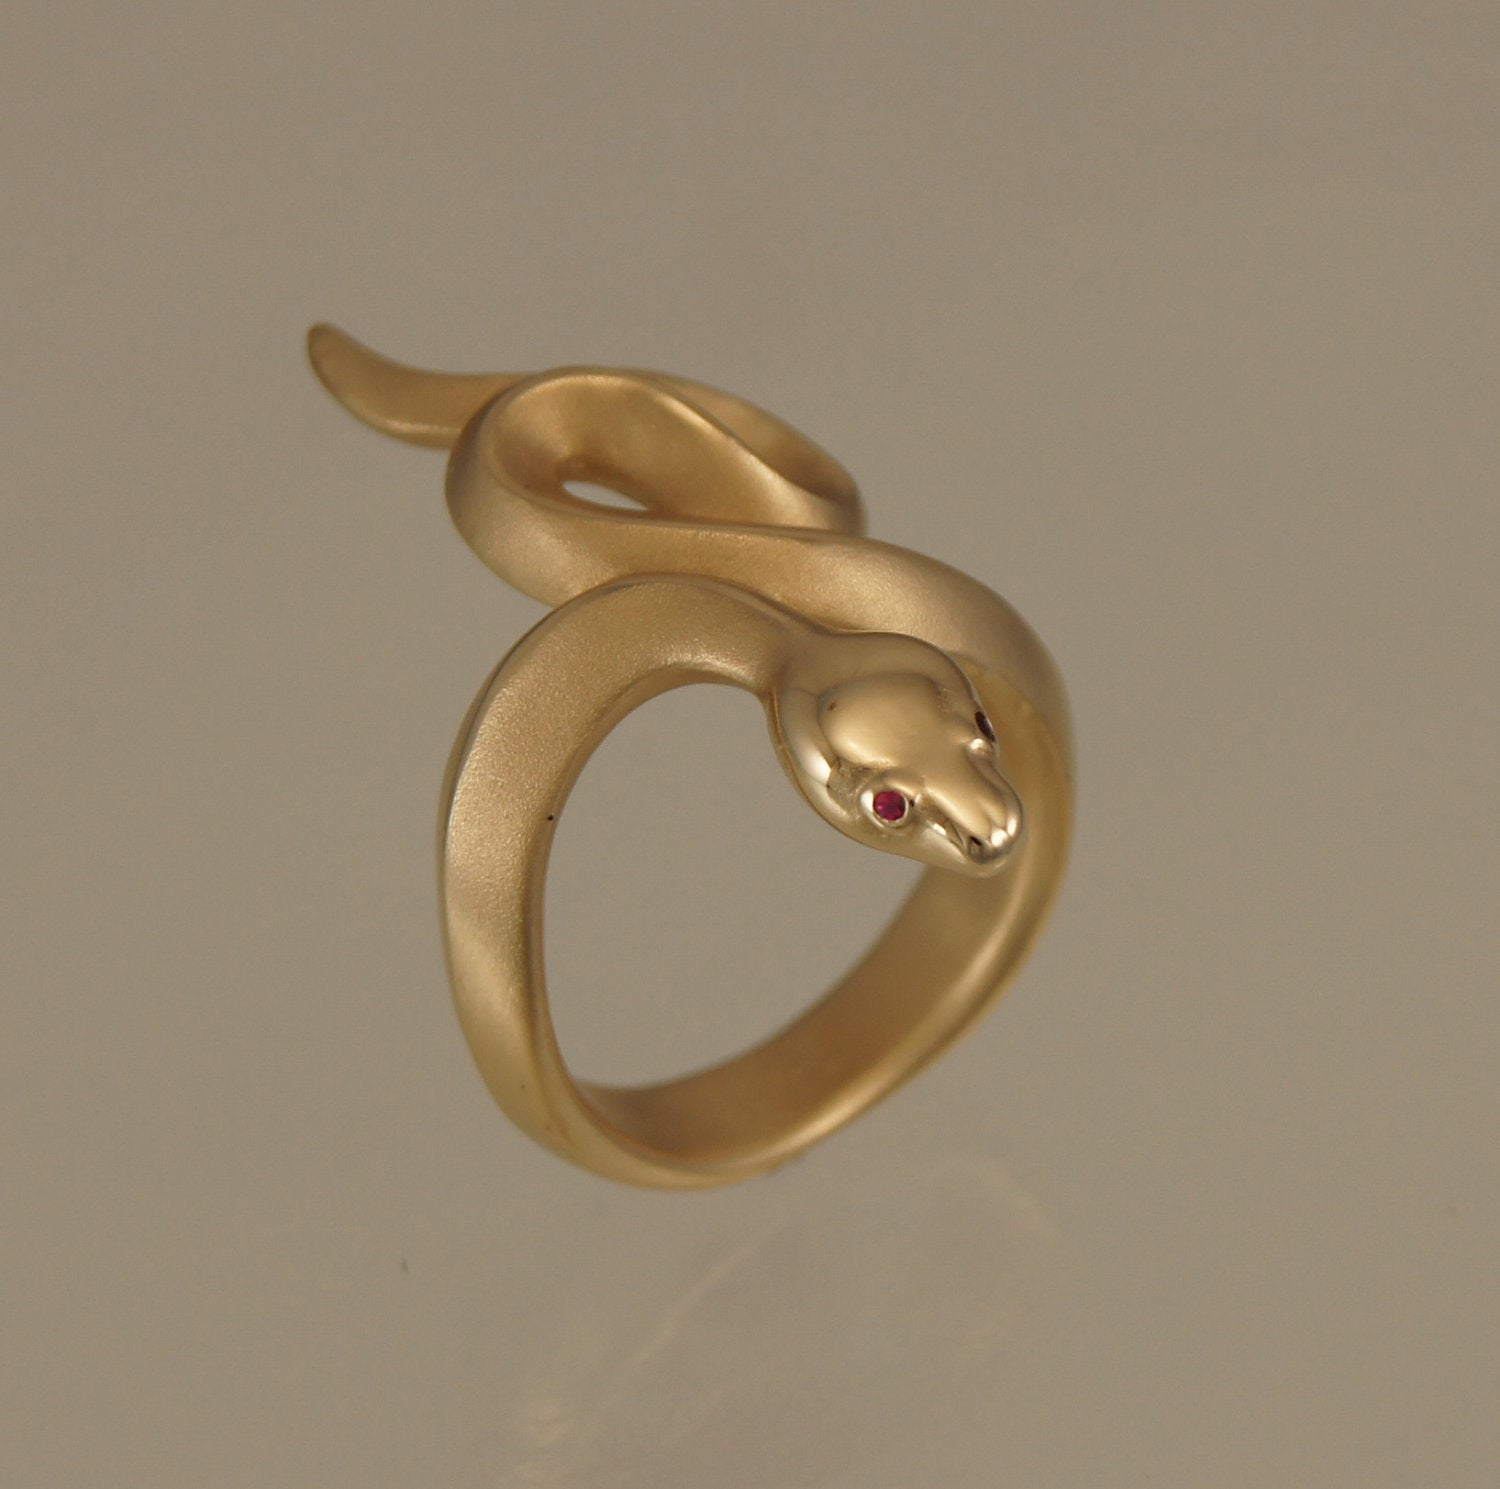 boa snake ring, bronze, ruby or blue sapphire eyes